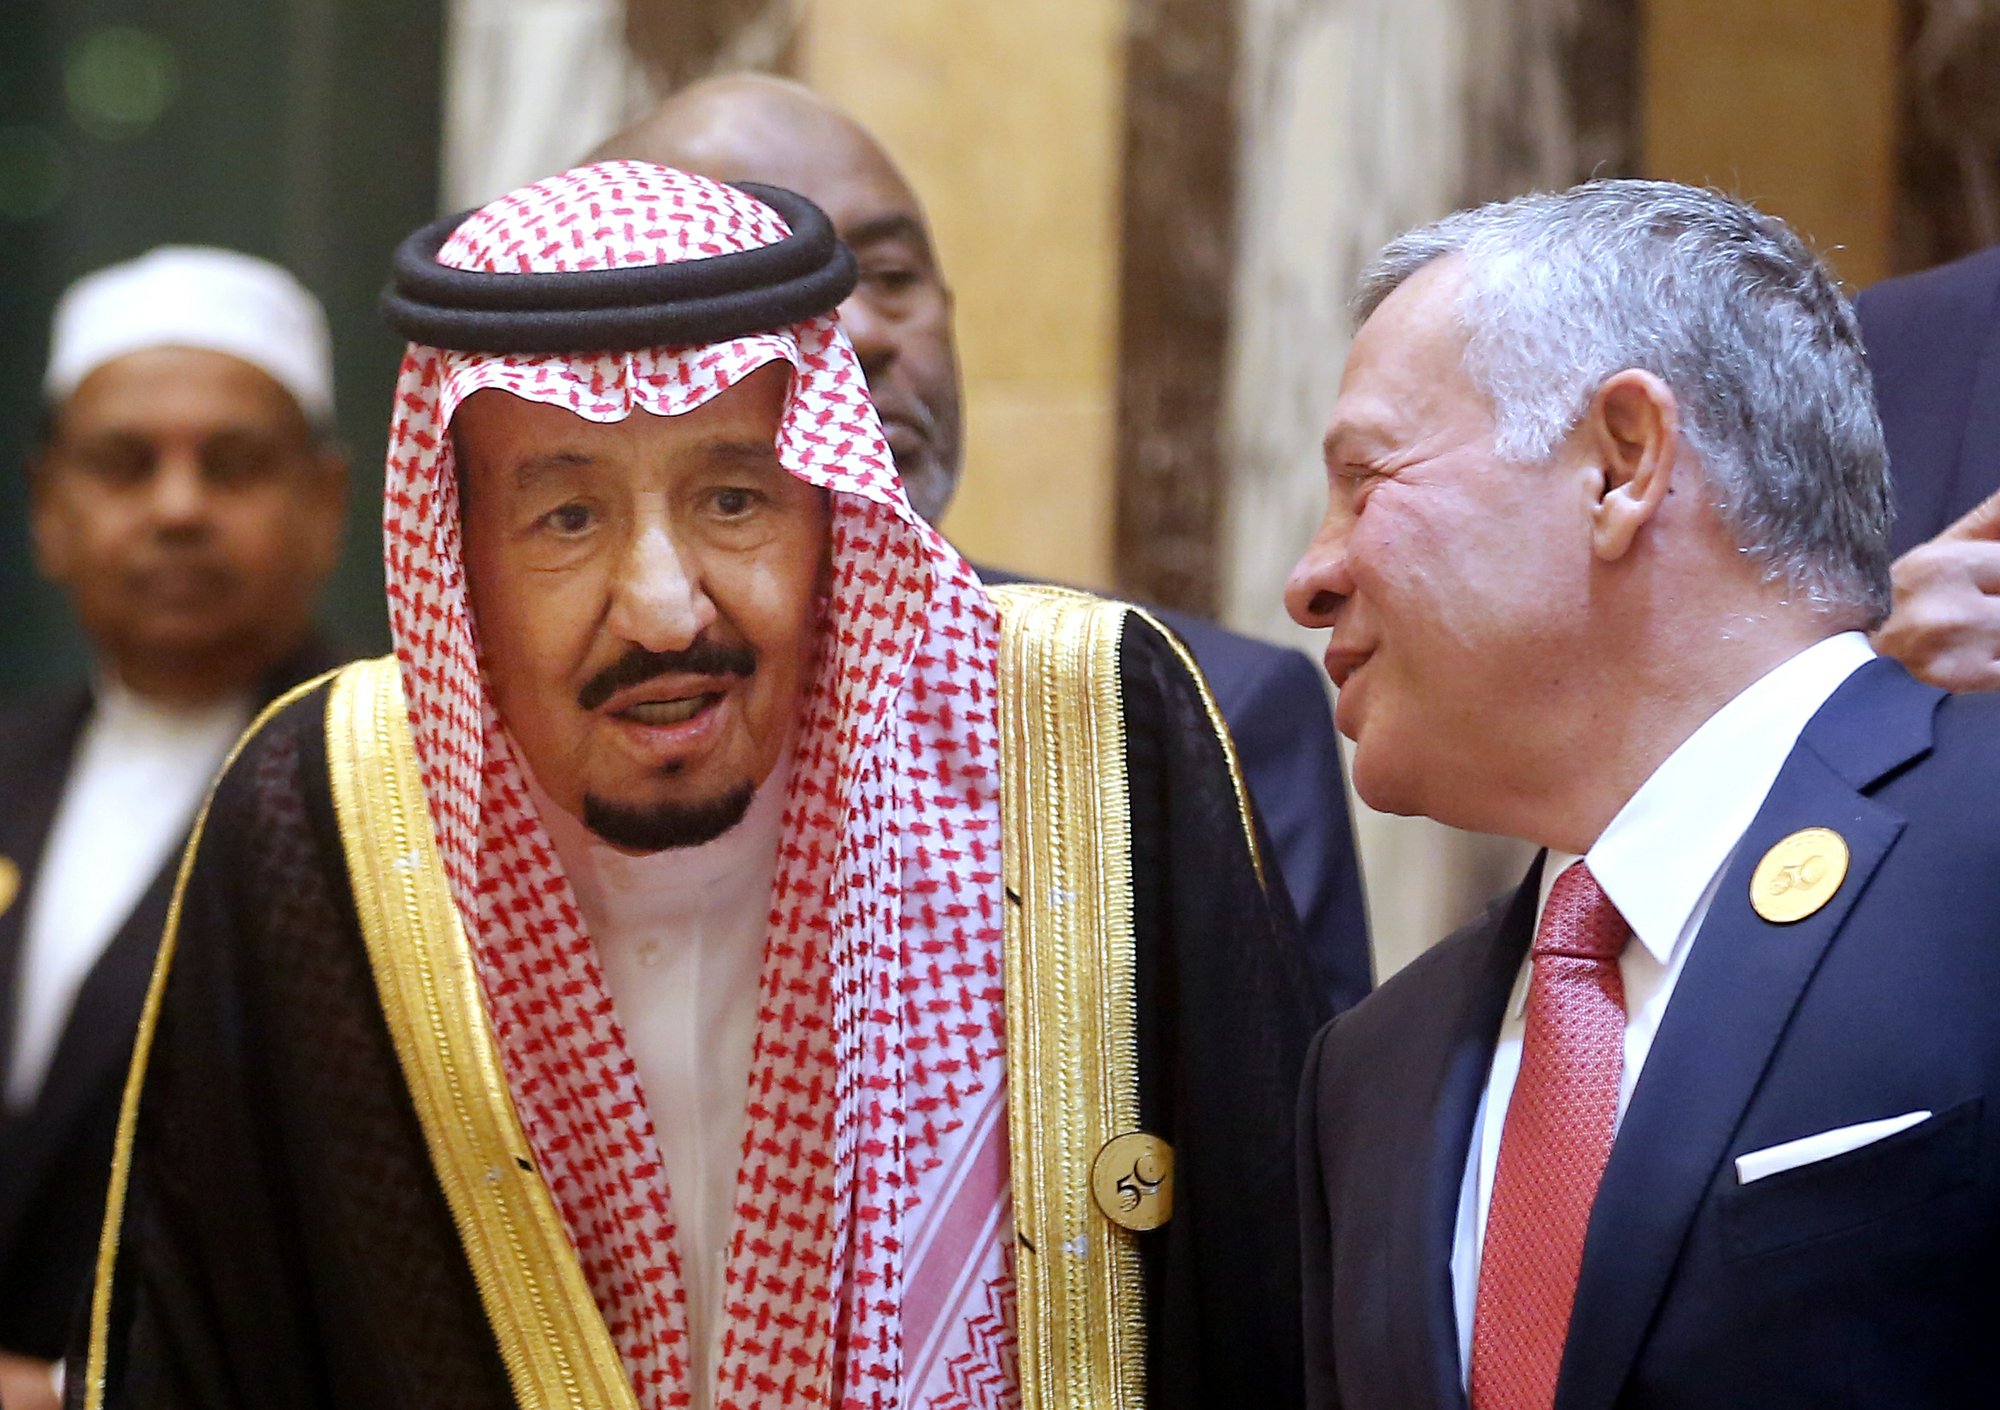 Saudi king slams Iran’s ‘terrorist acts’ at Islamic summit